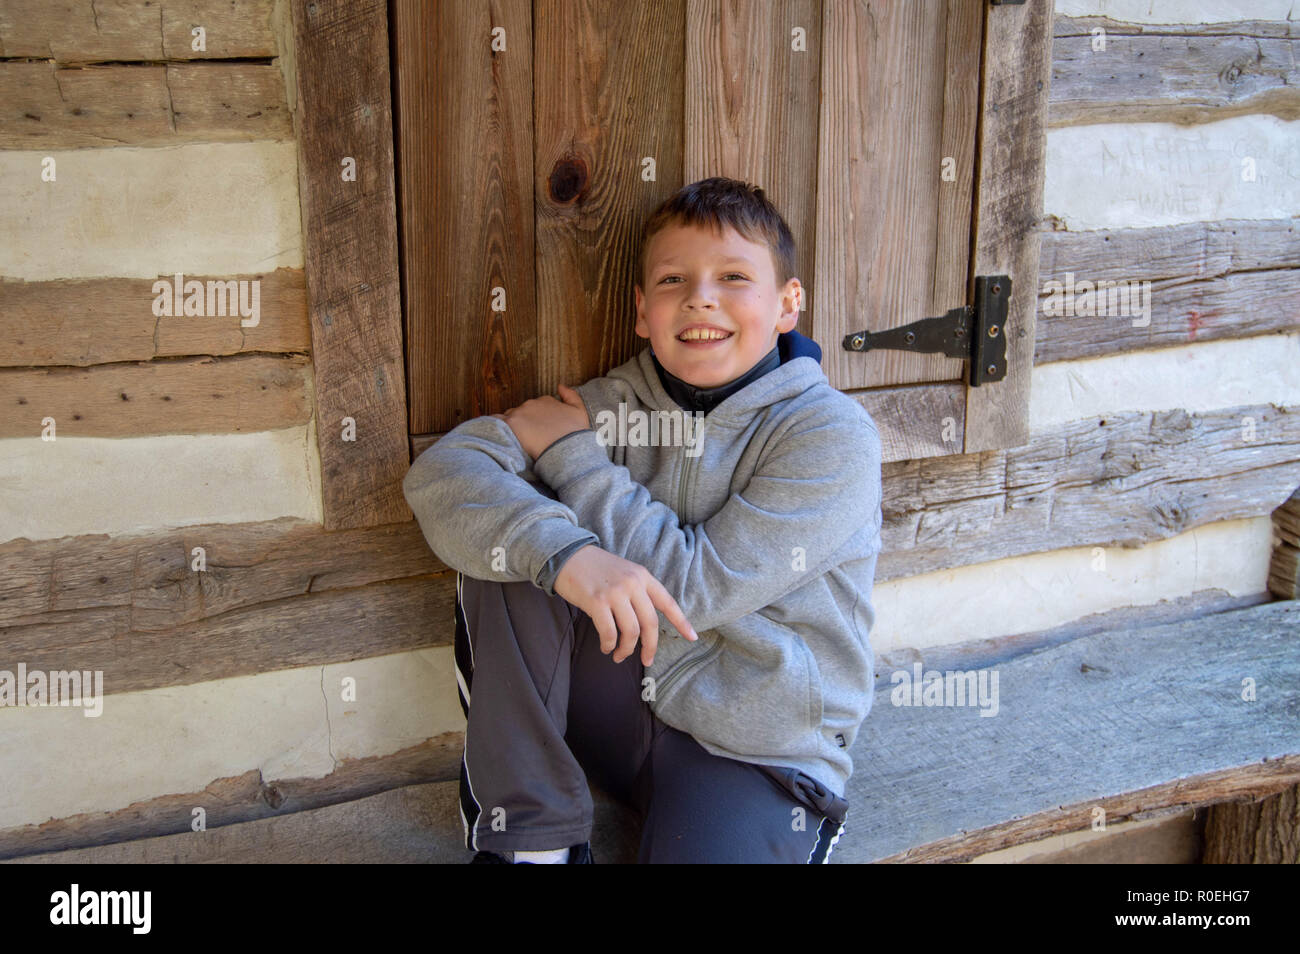 Child on Bench Stock Photo